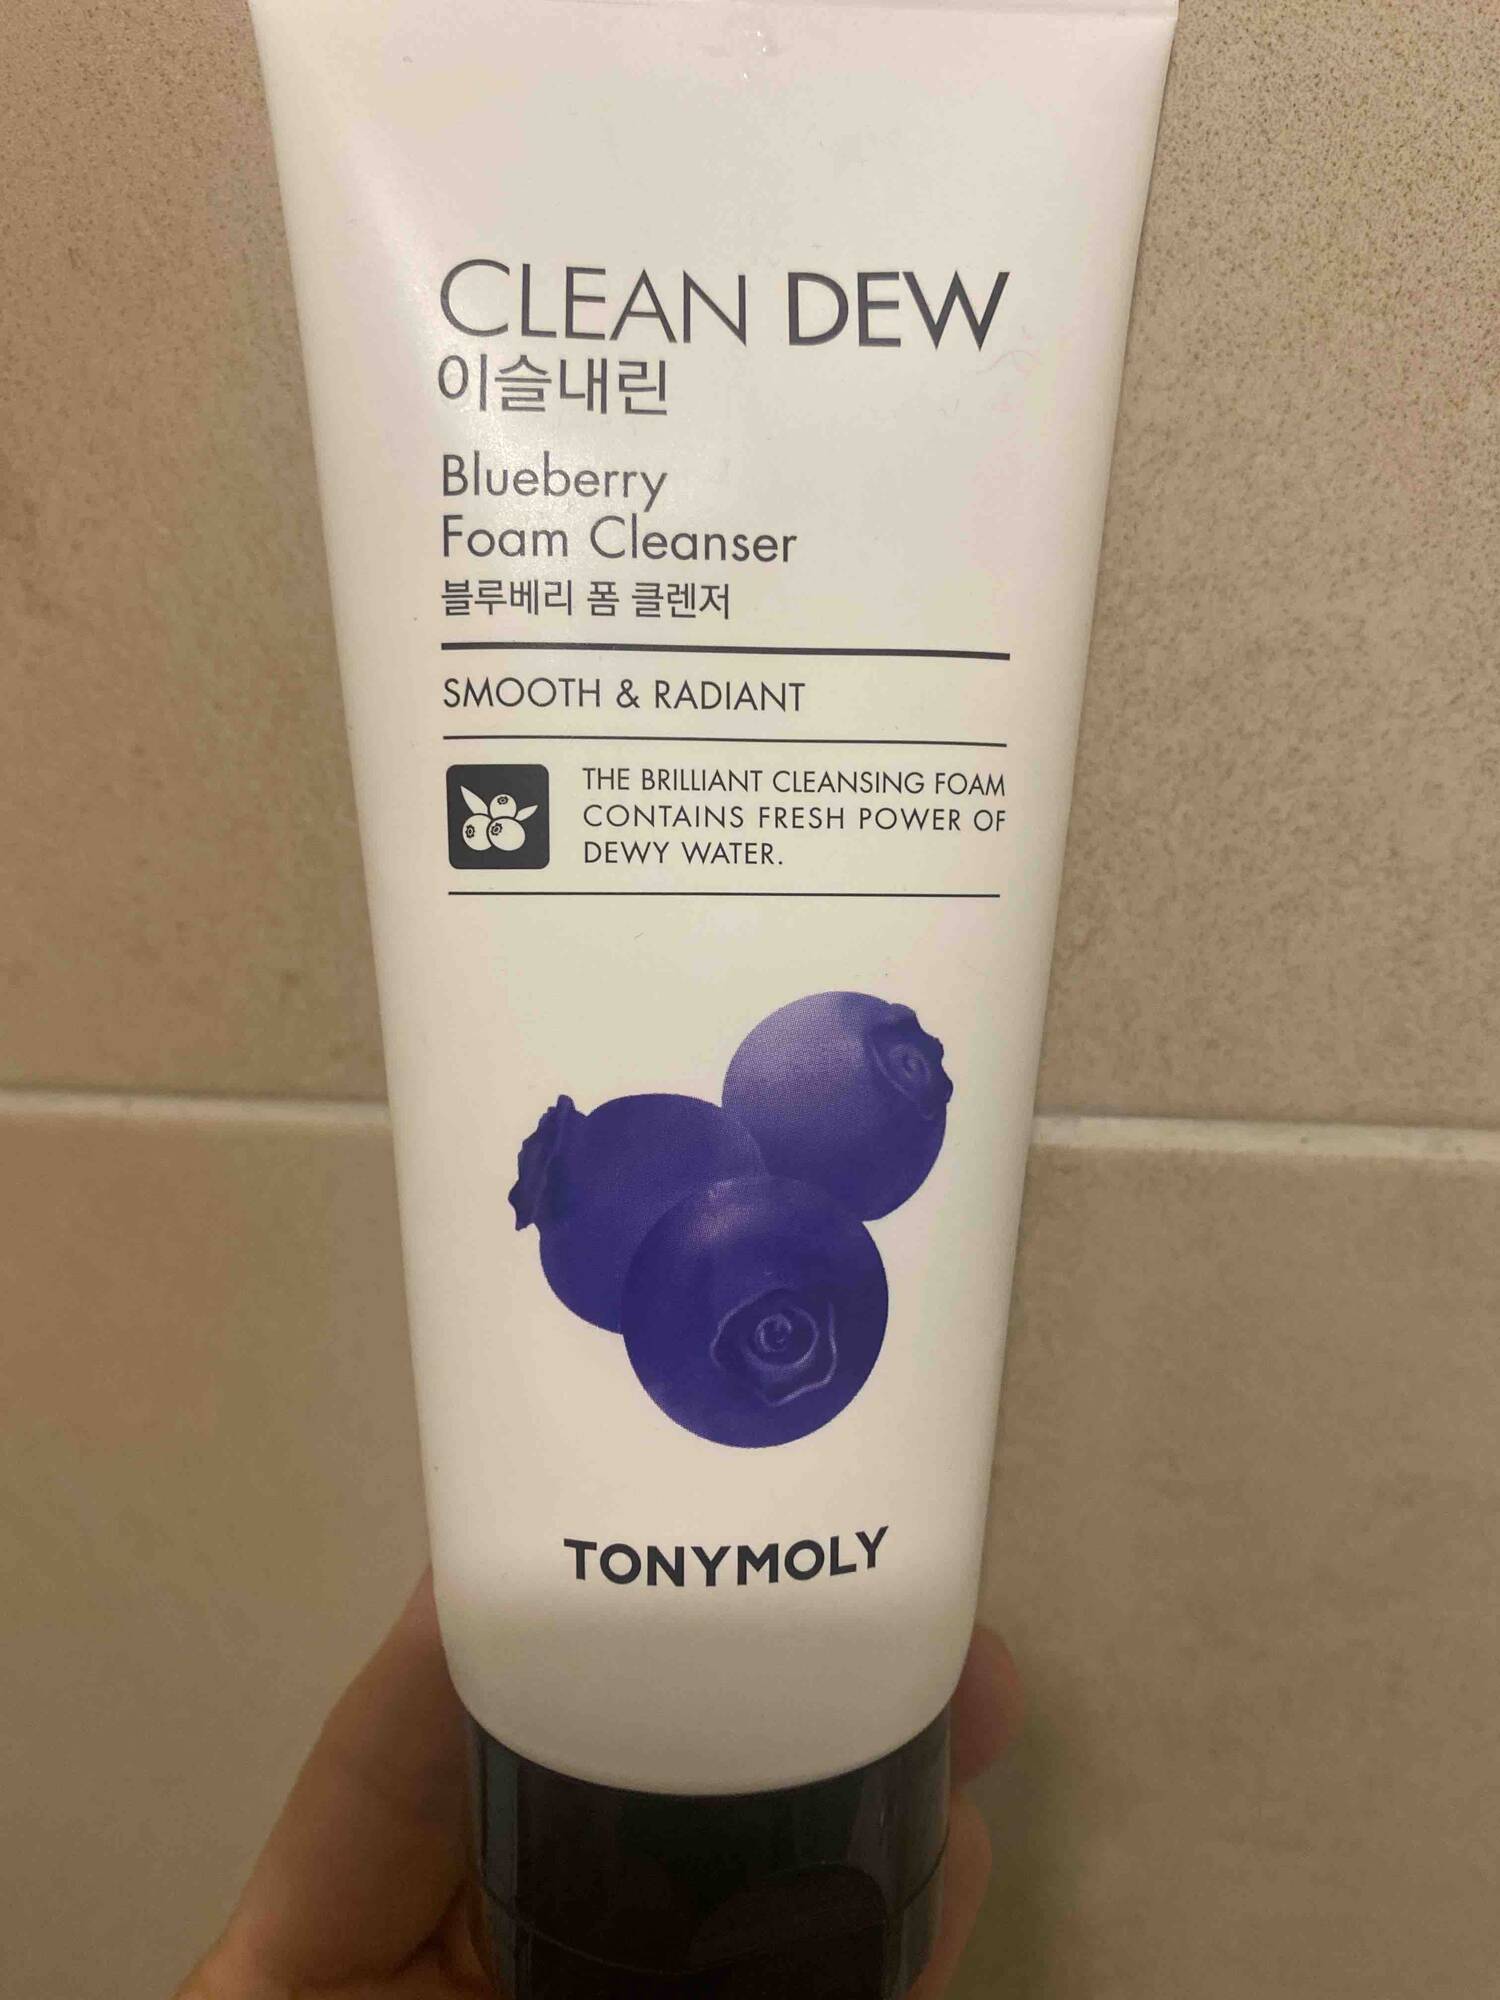 TONYMOLY - Clean dew - Blueberry foam cleanser